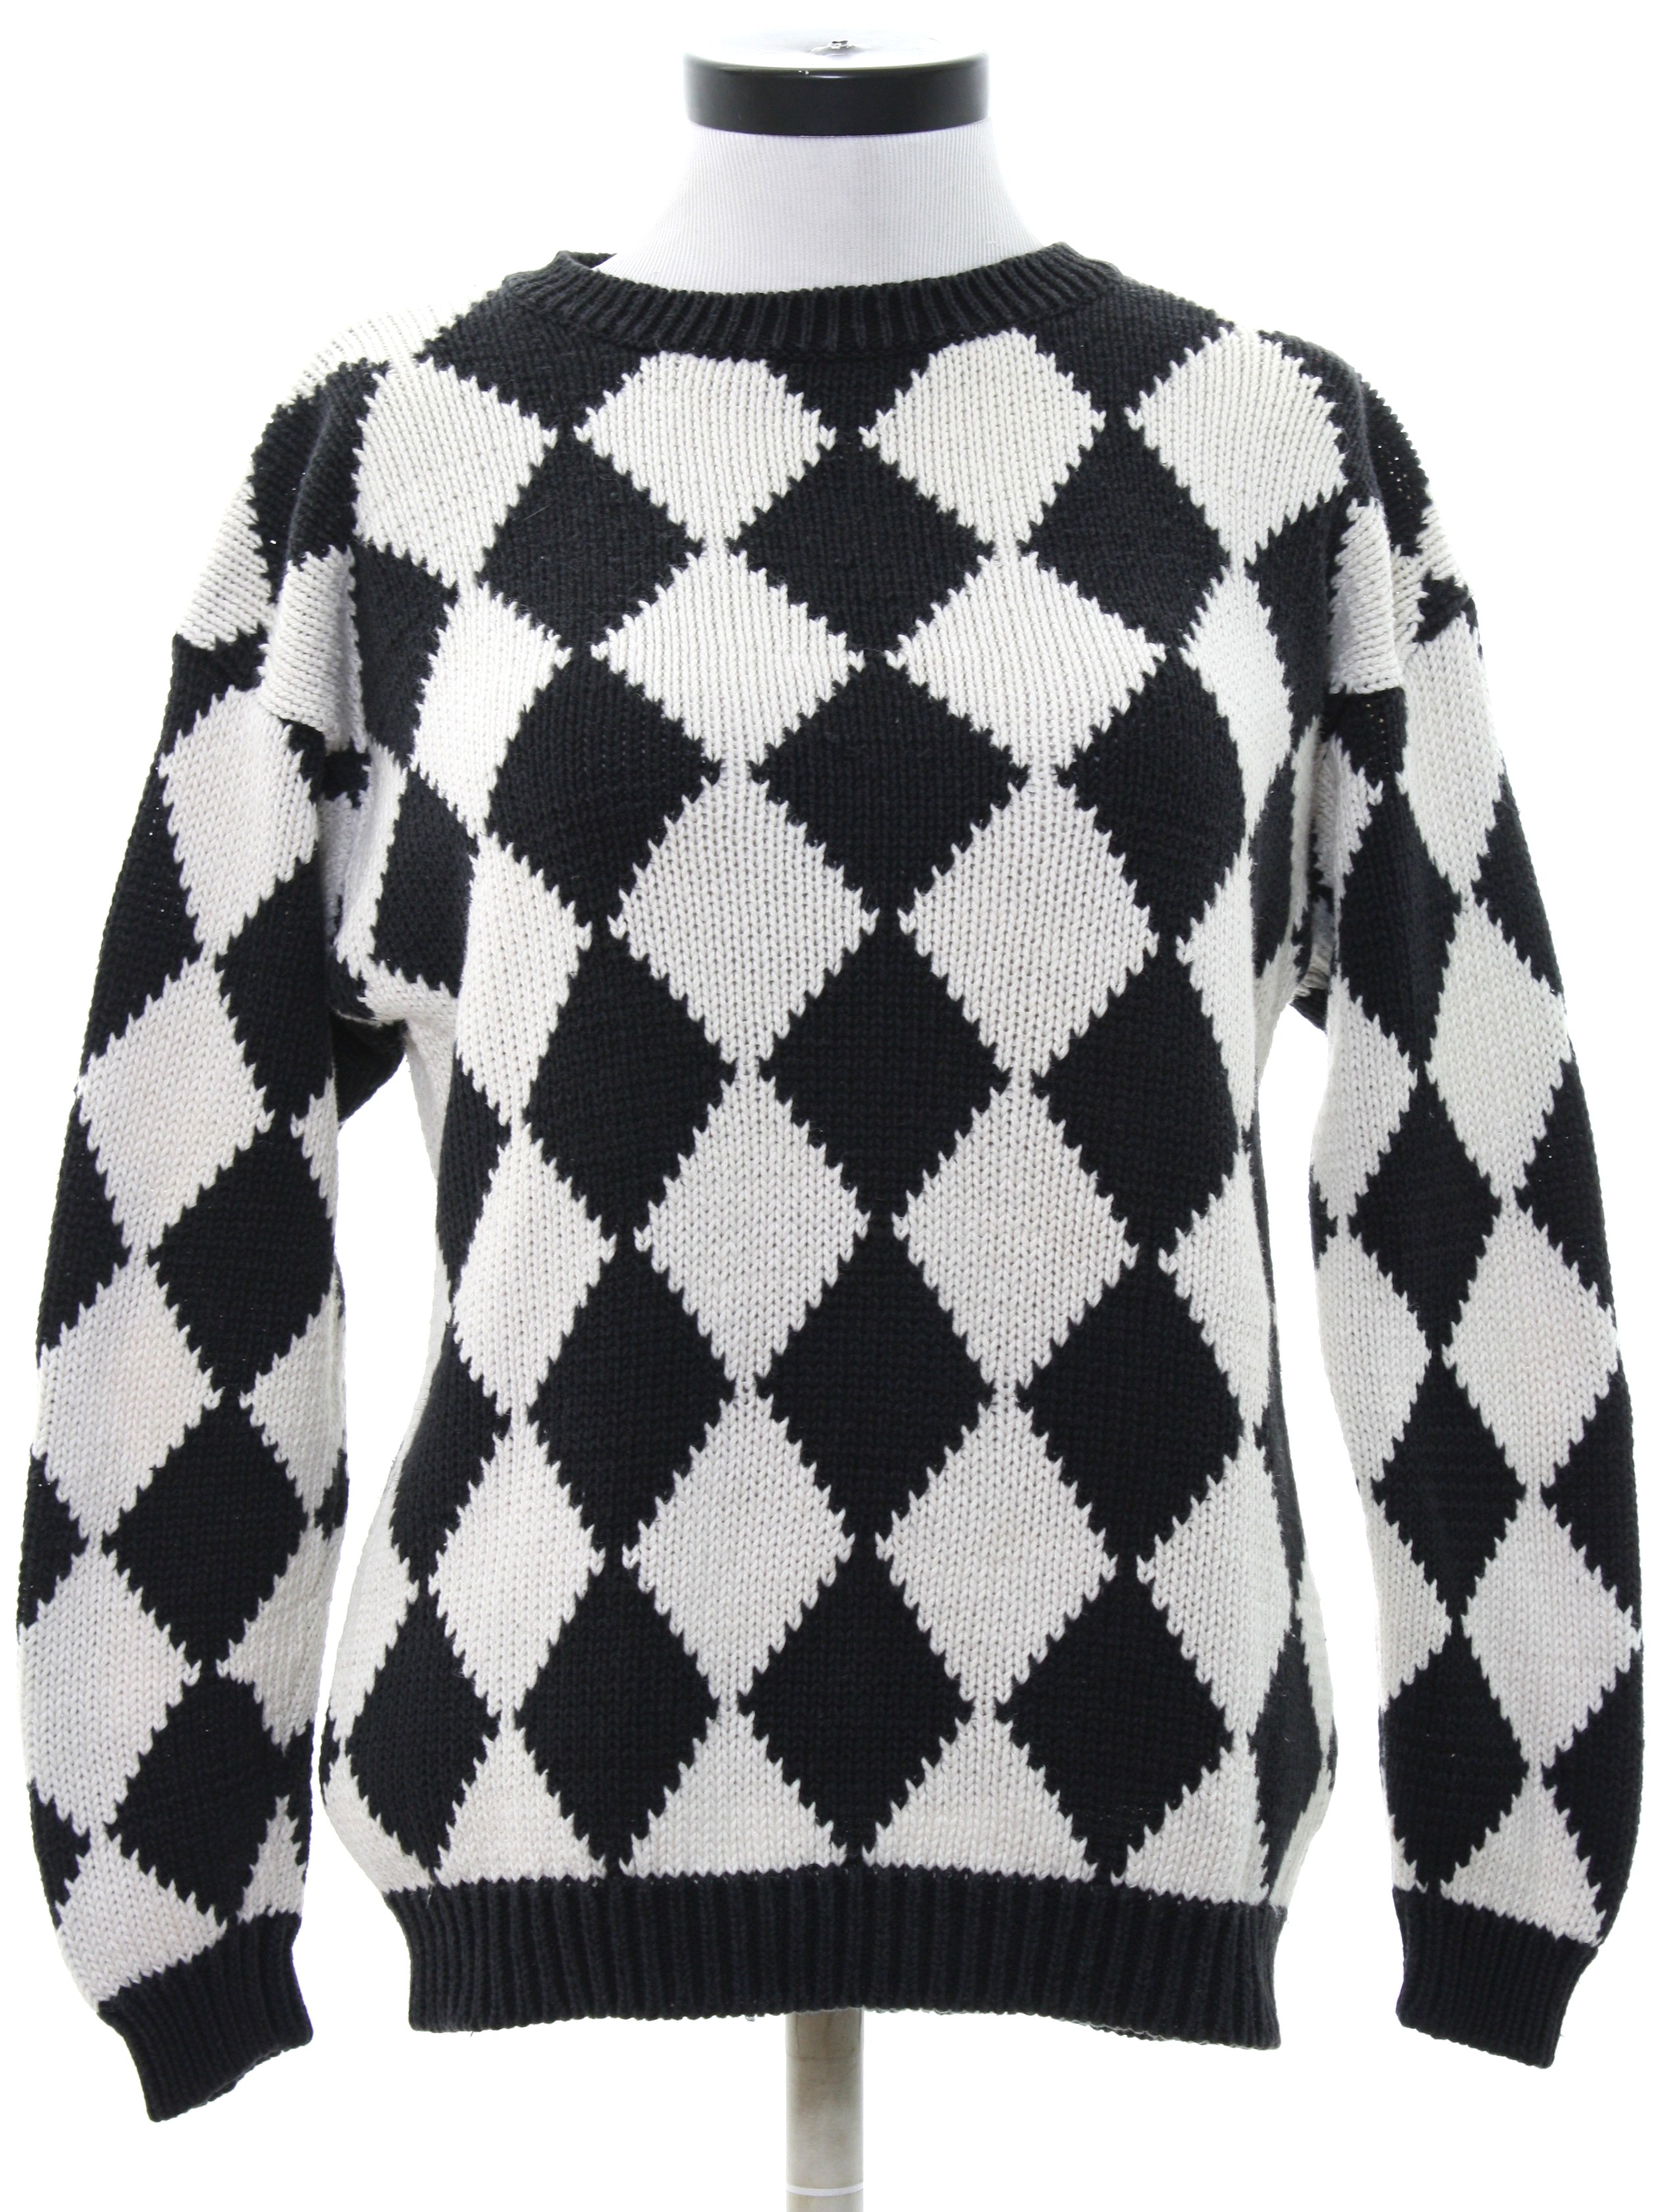 Vintage Suburbans 1980s Sweater: 80s -Suburbans- Womens black and white ...